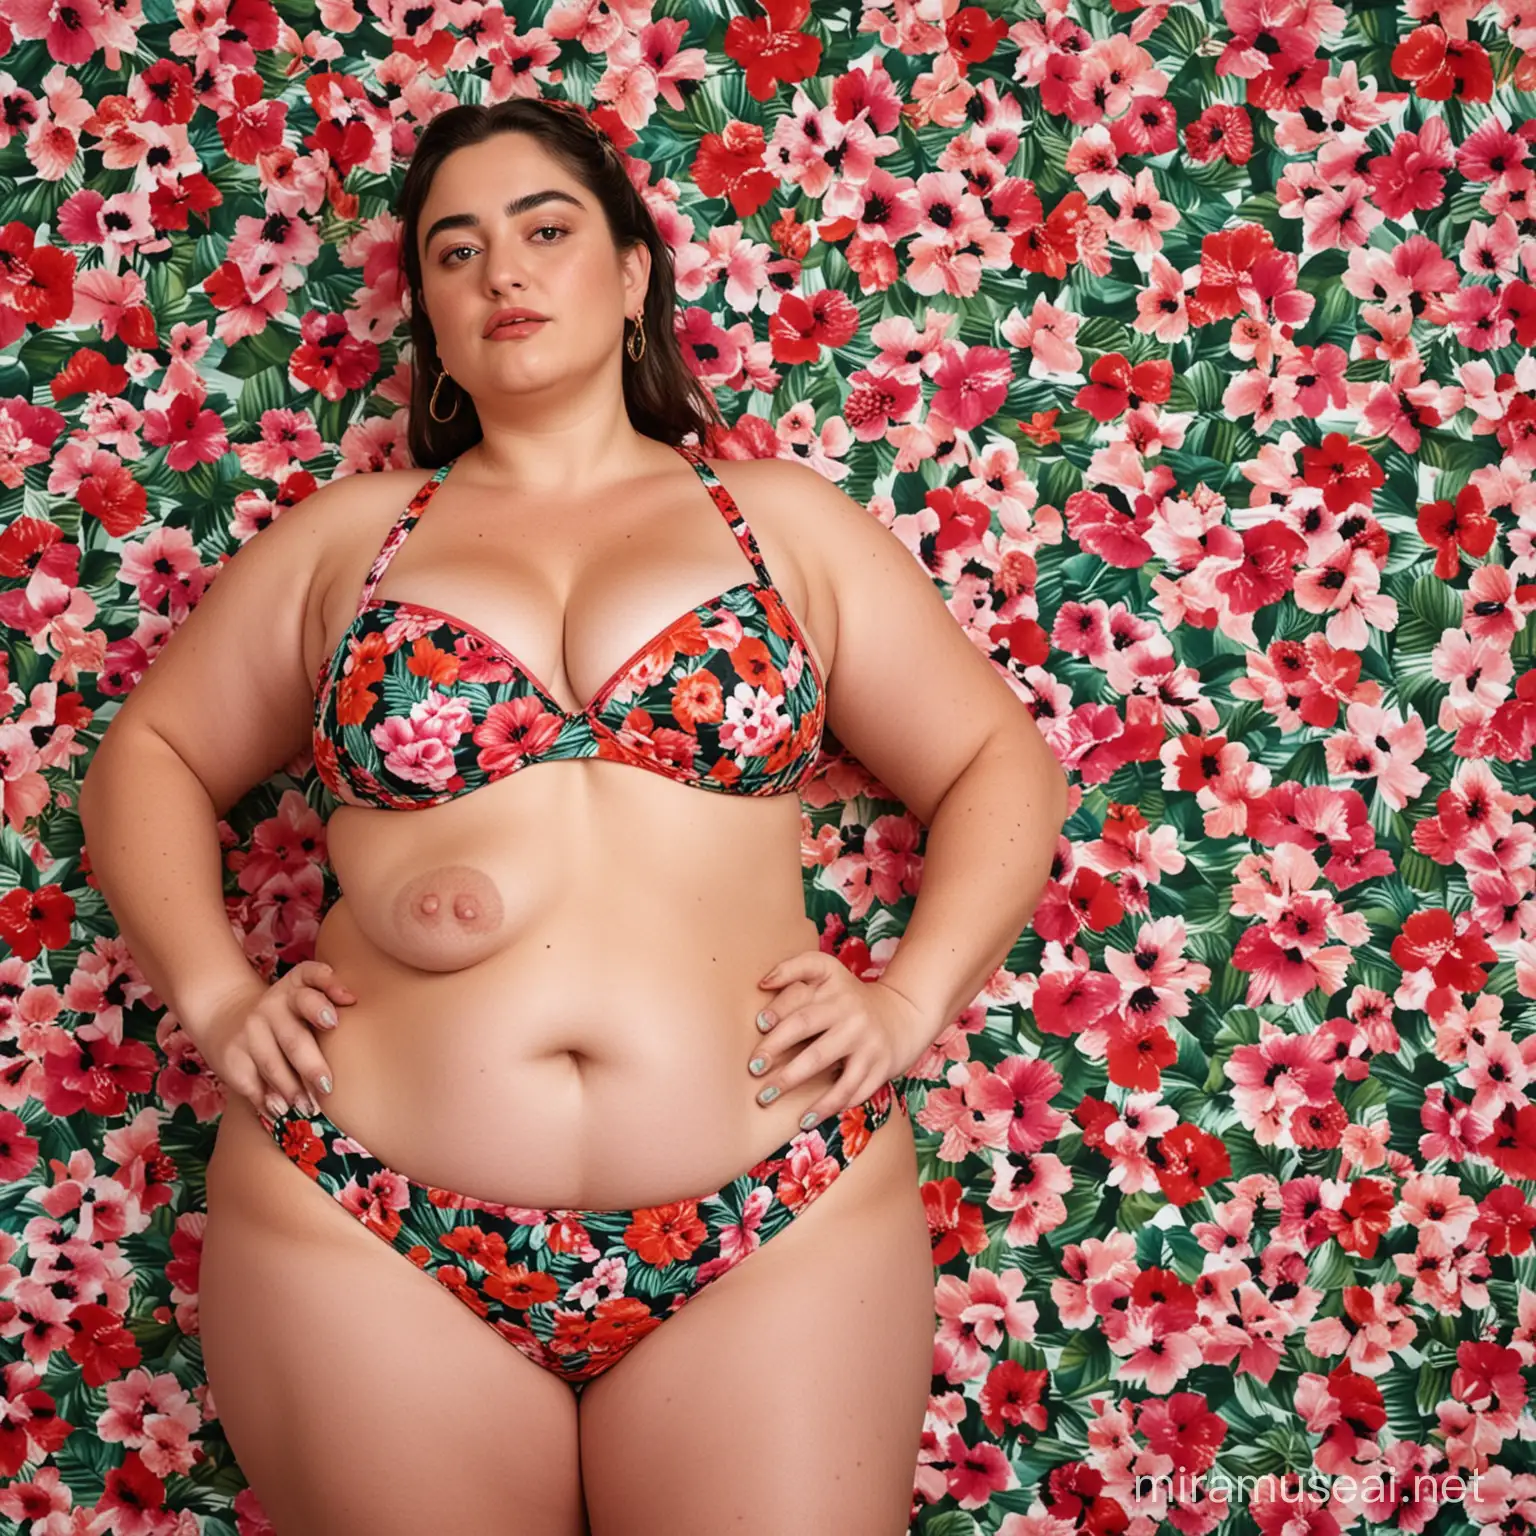 Chubby Frida Coelho in Bikini Captivating Portrait of a Curvy Woman